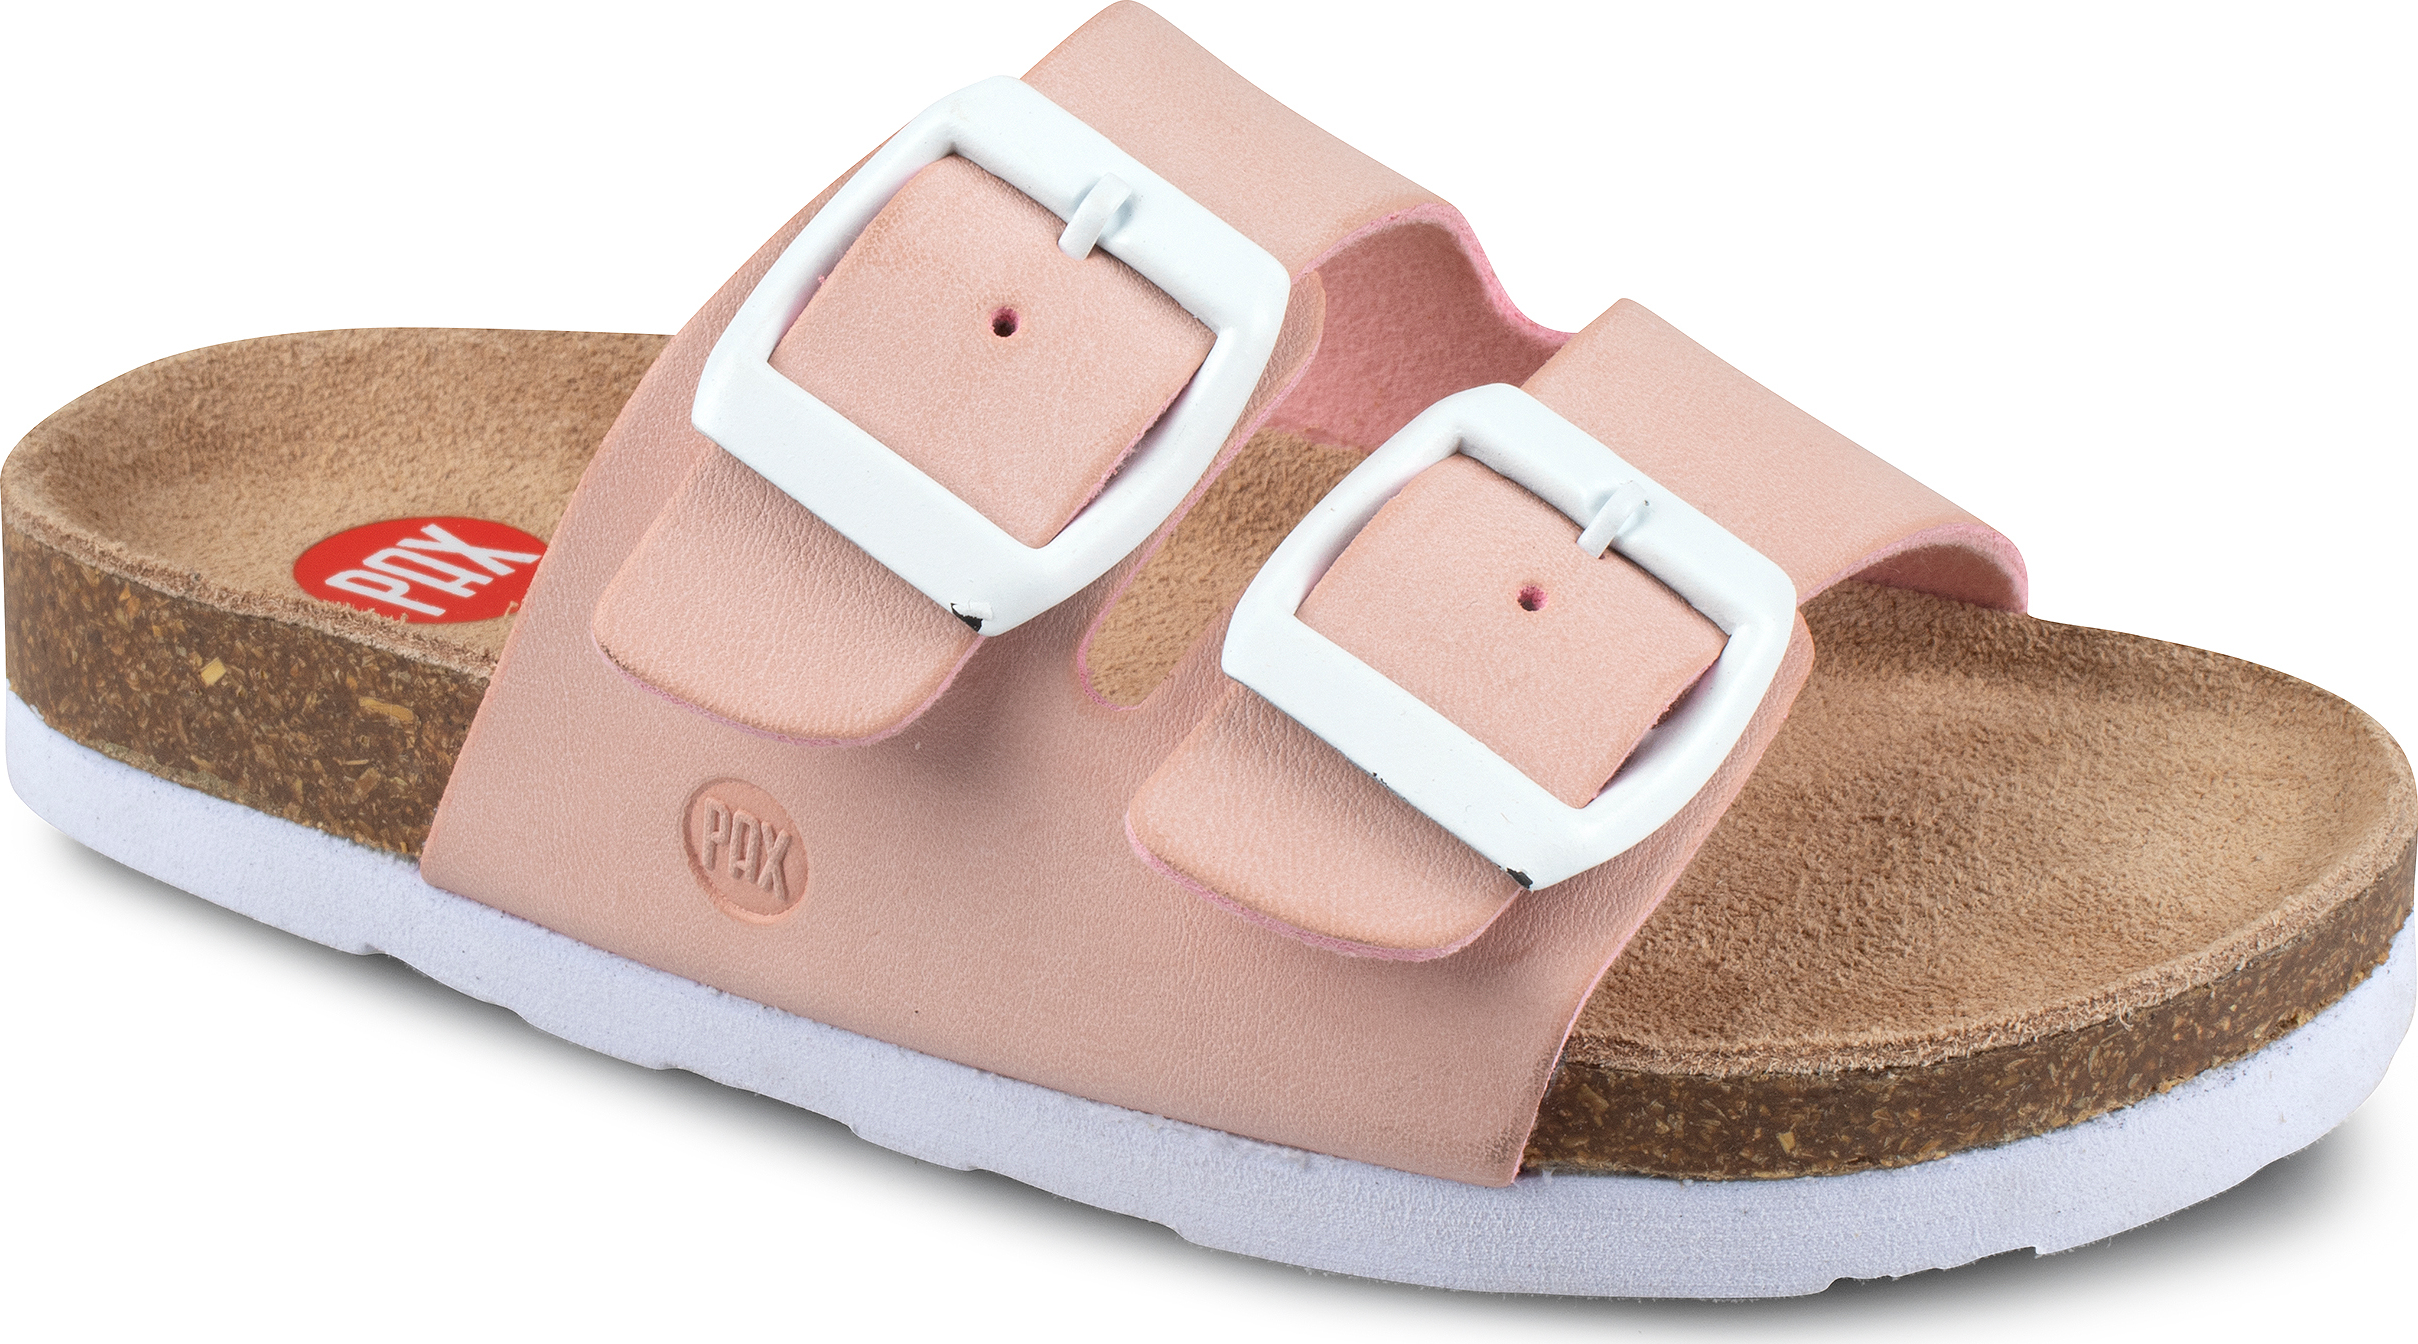 Pax Kids’ Pika Sandal Light Pink